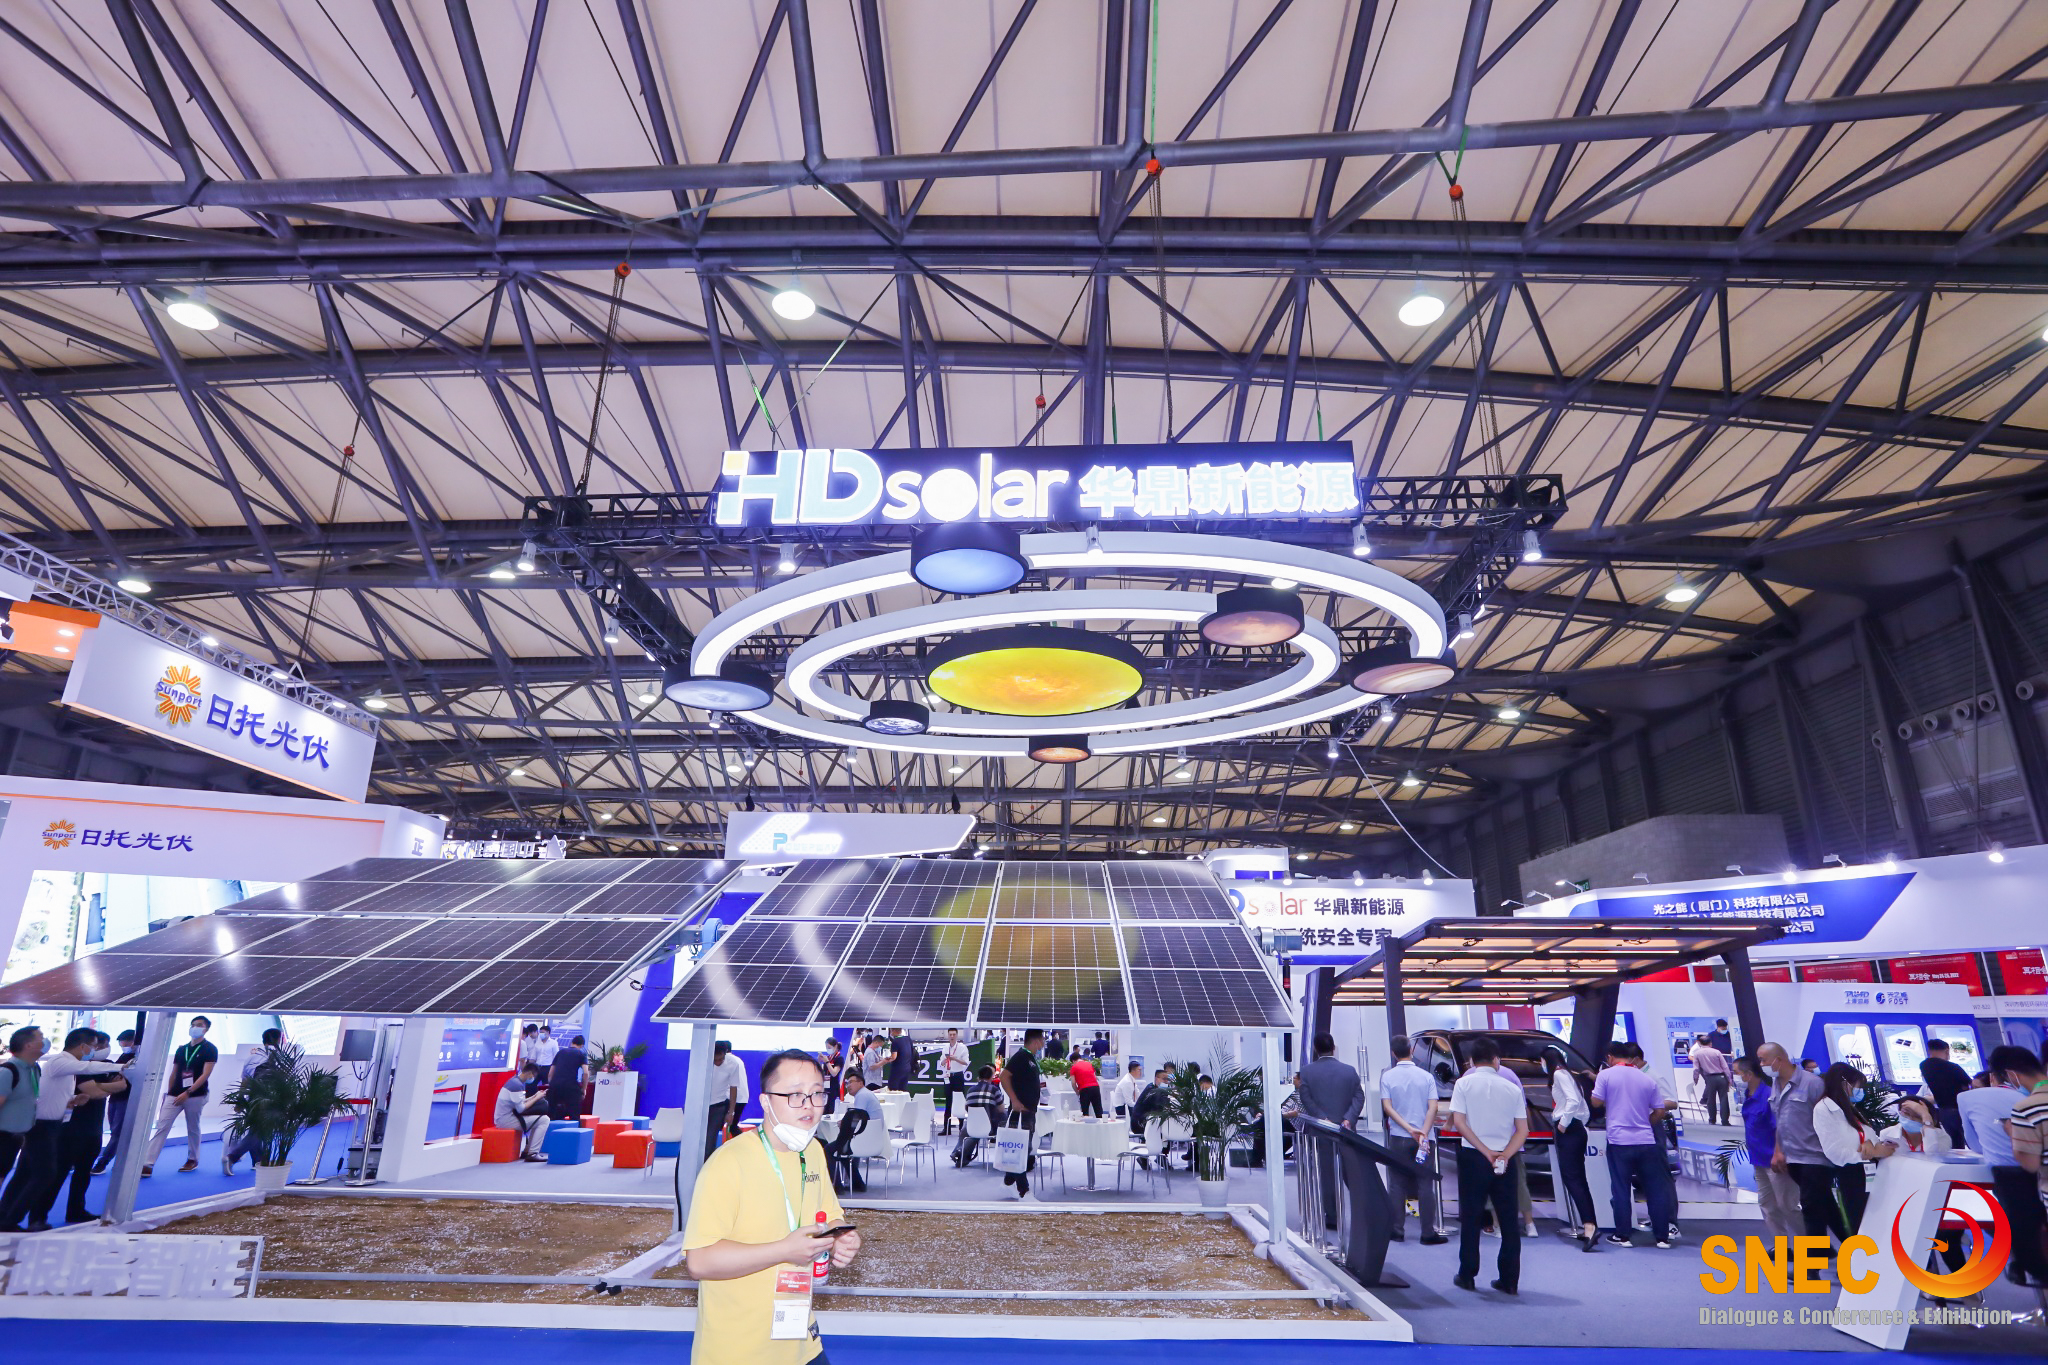 SNEC*八届2023国际储能技术和装备及应用上海大会暨展览会